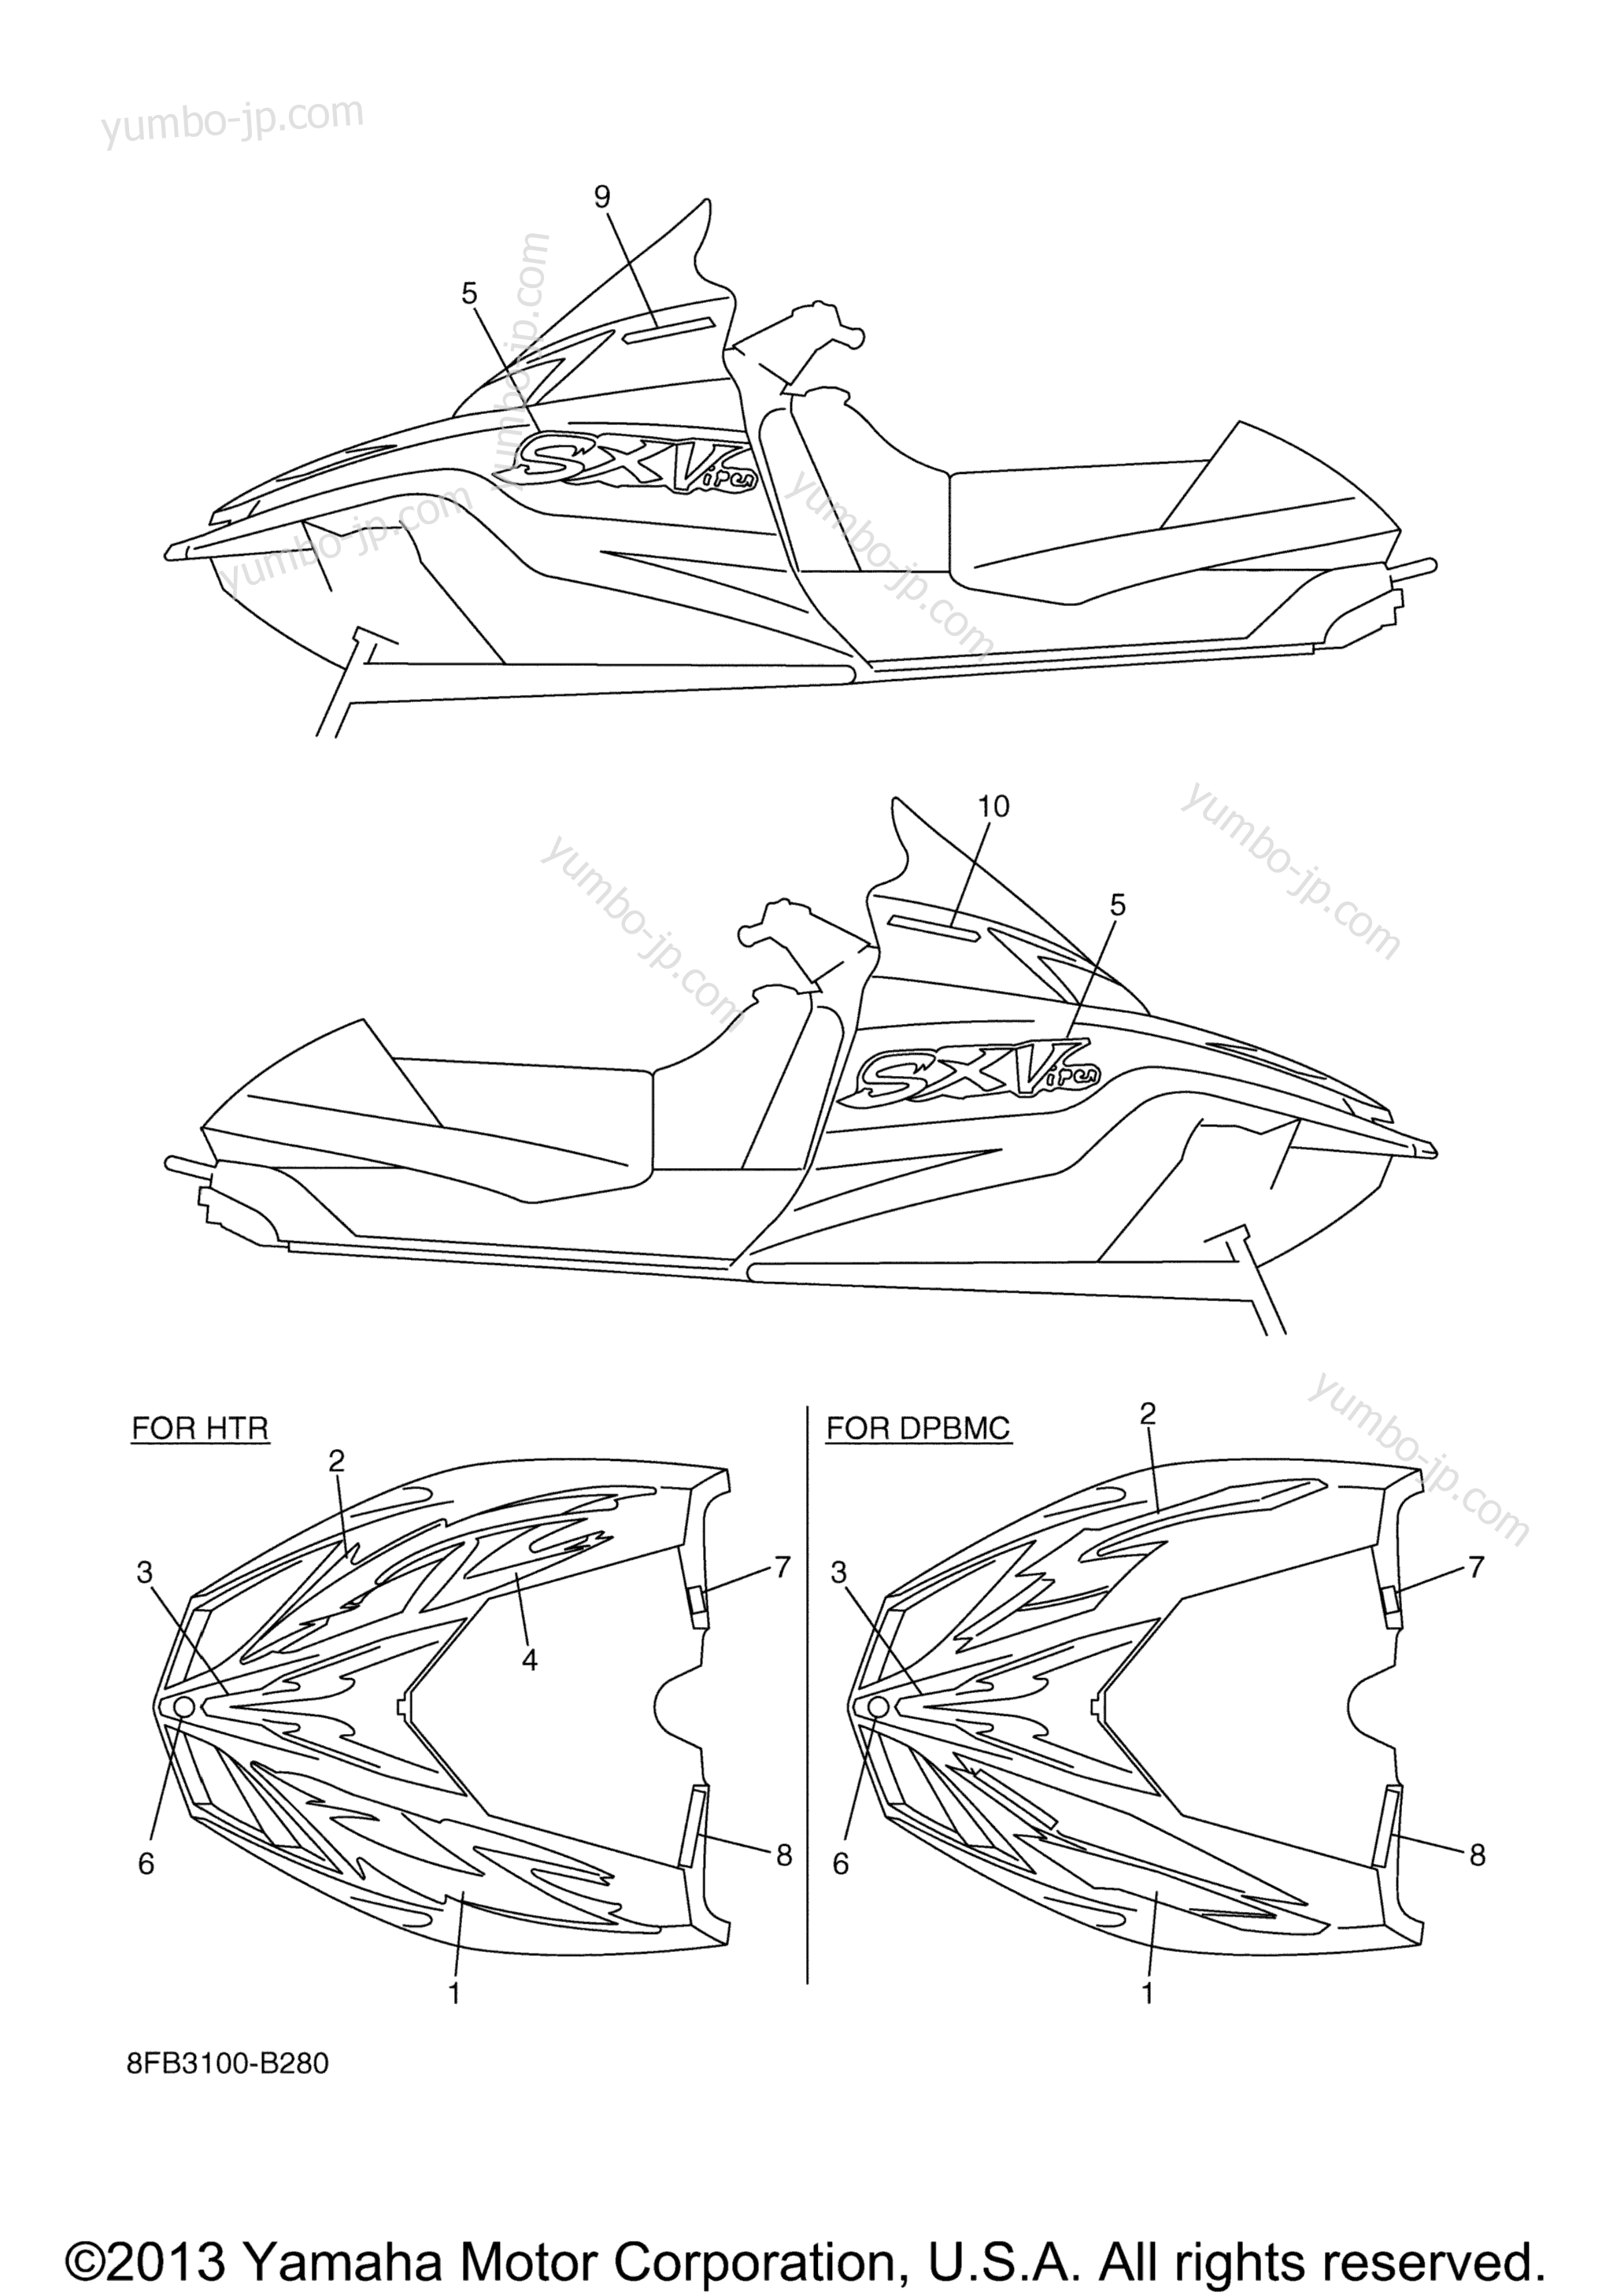 EMBLEM for snowmobiles YAMAHA SX VIPER ER (SXV70ERH) 2003 year